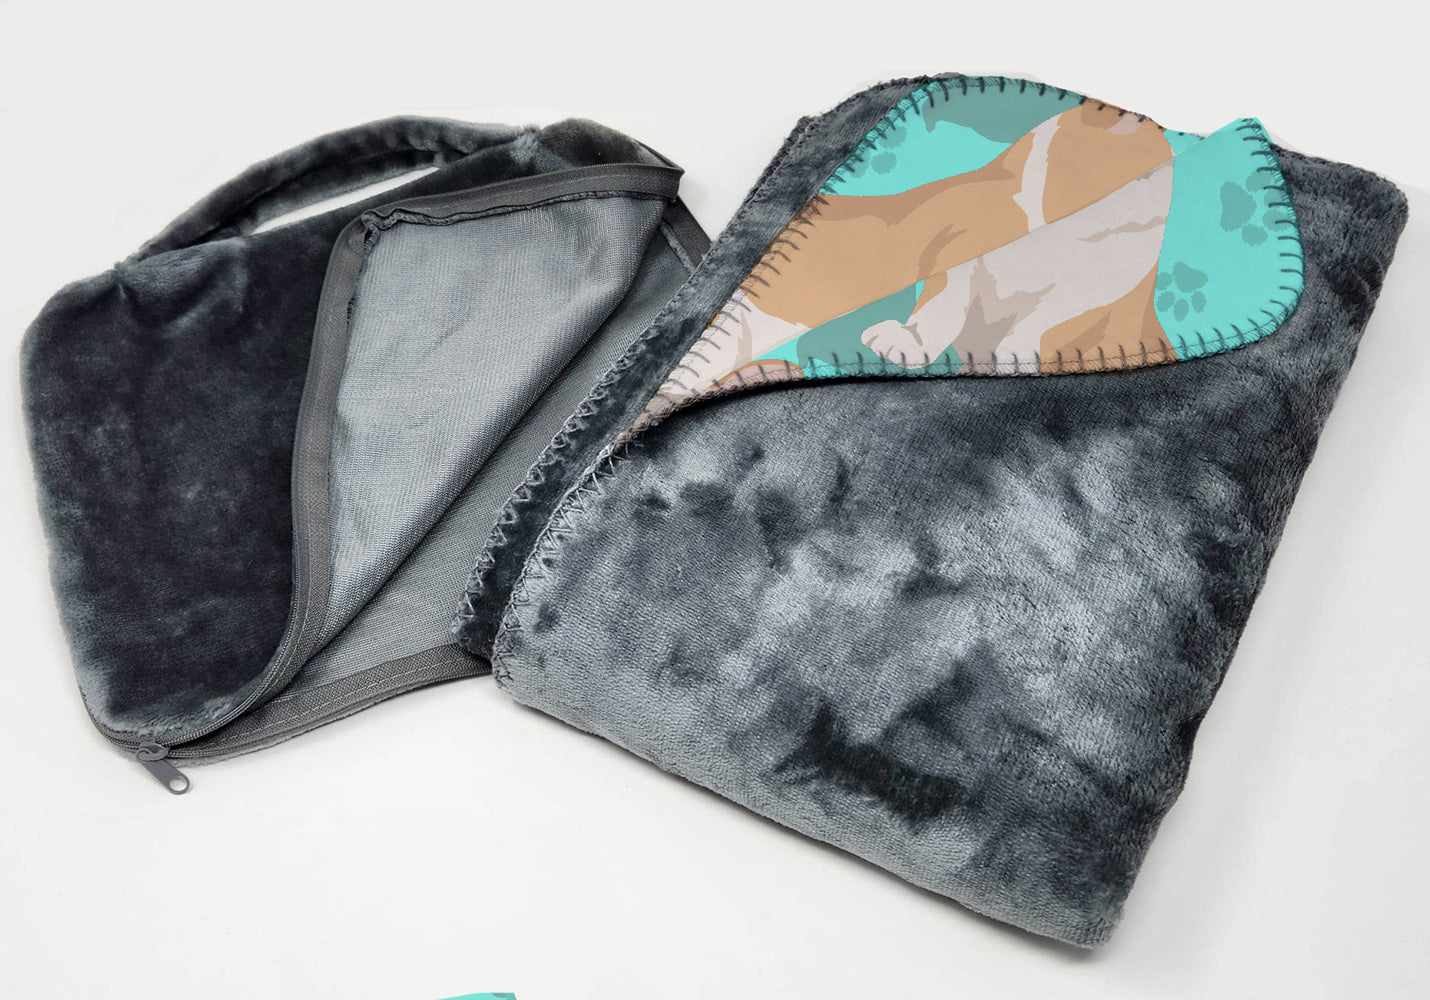 Fawn Cardigan Corgi Soft Travel Blanket with Bag - the-store.com